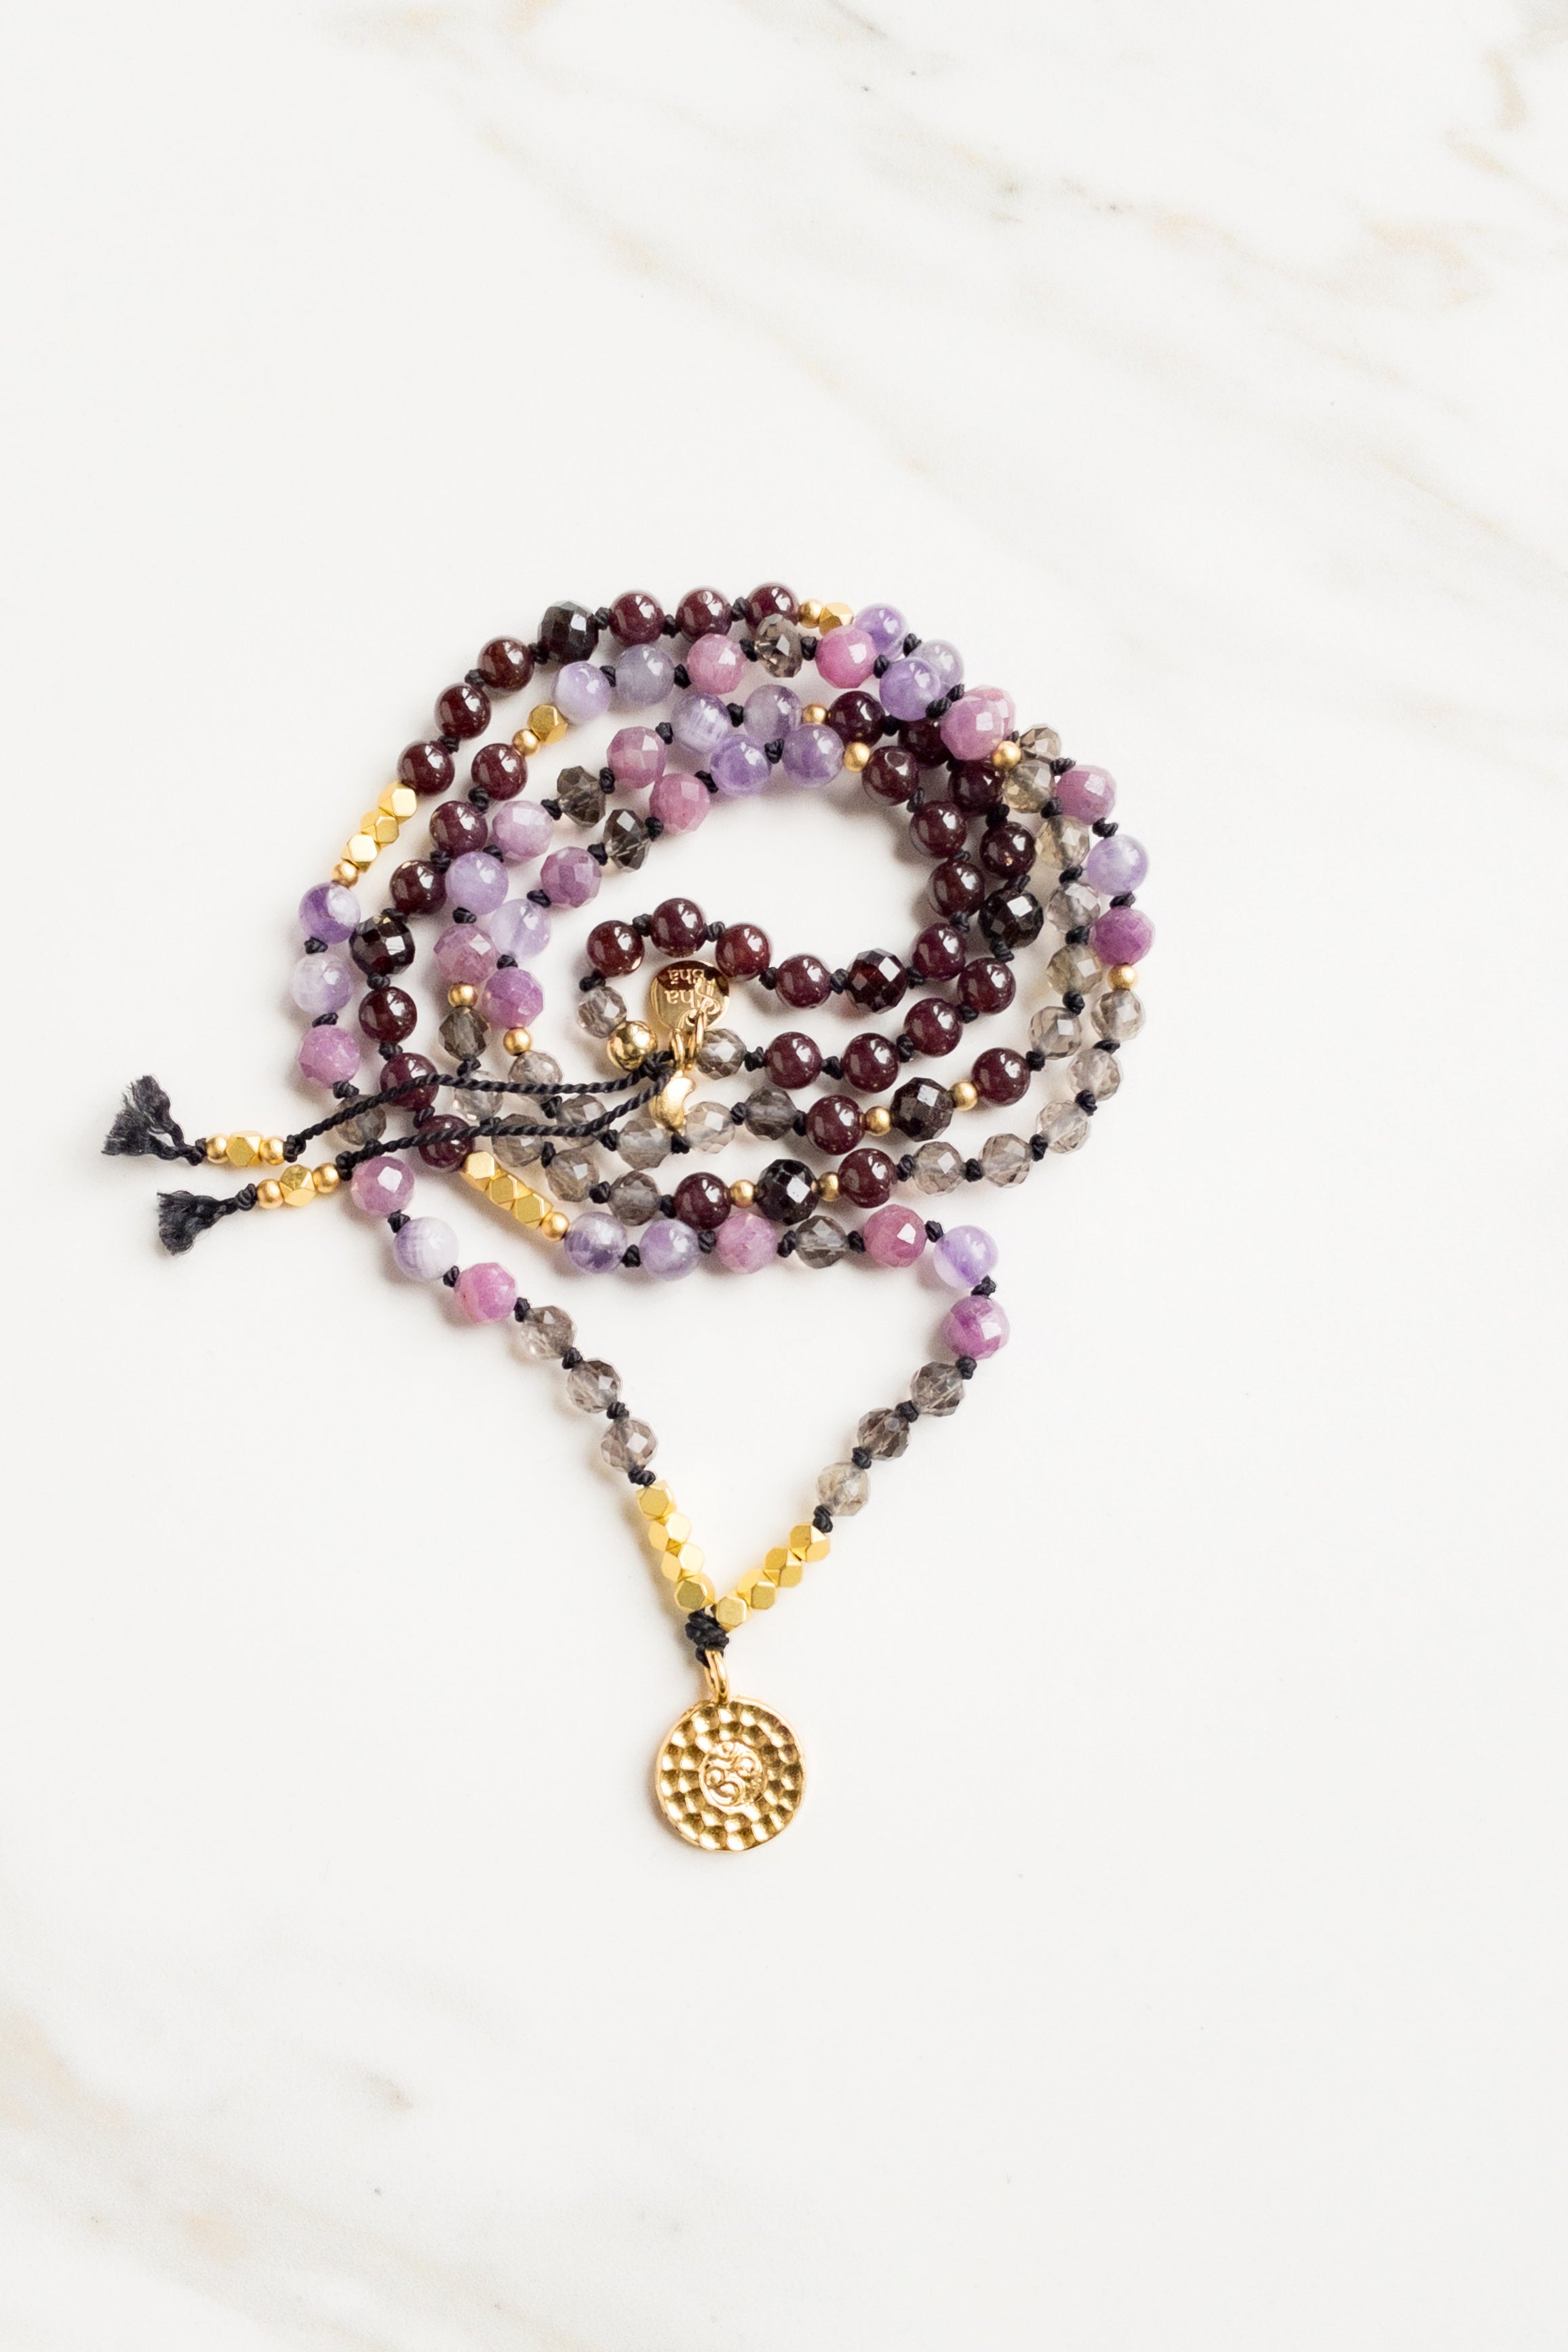 Ethereal Harmony MALA Necklace  - shasha jewellery yoga inspired Switzerland 